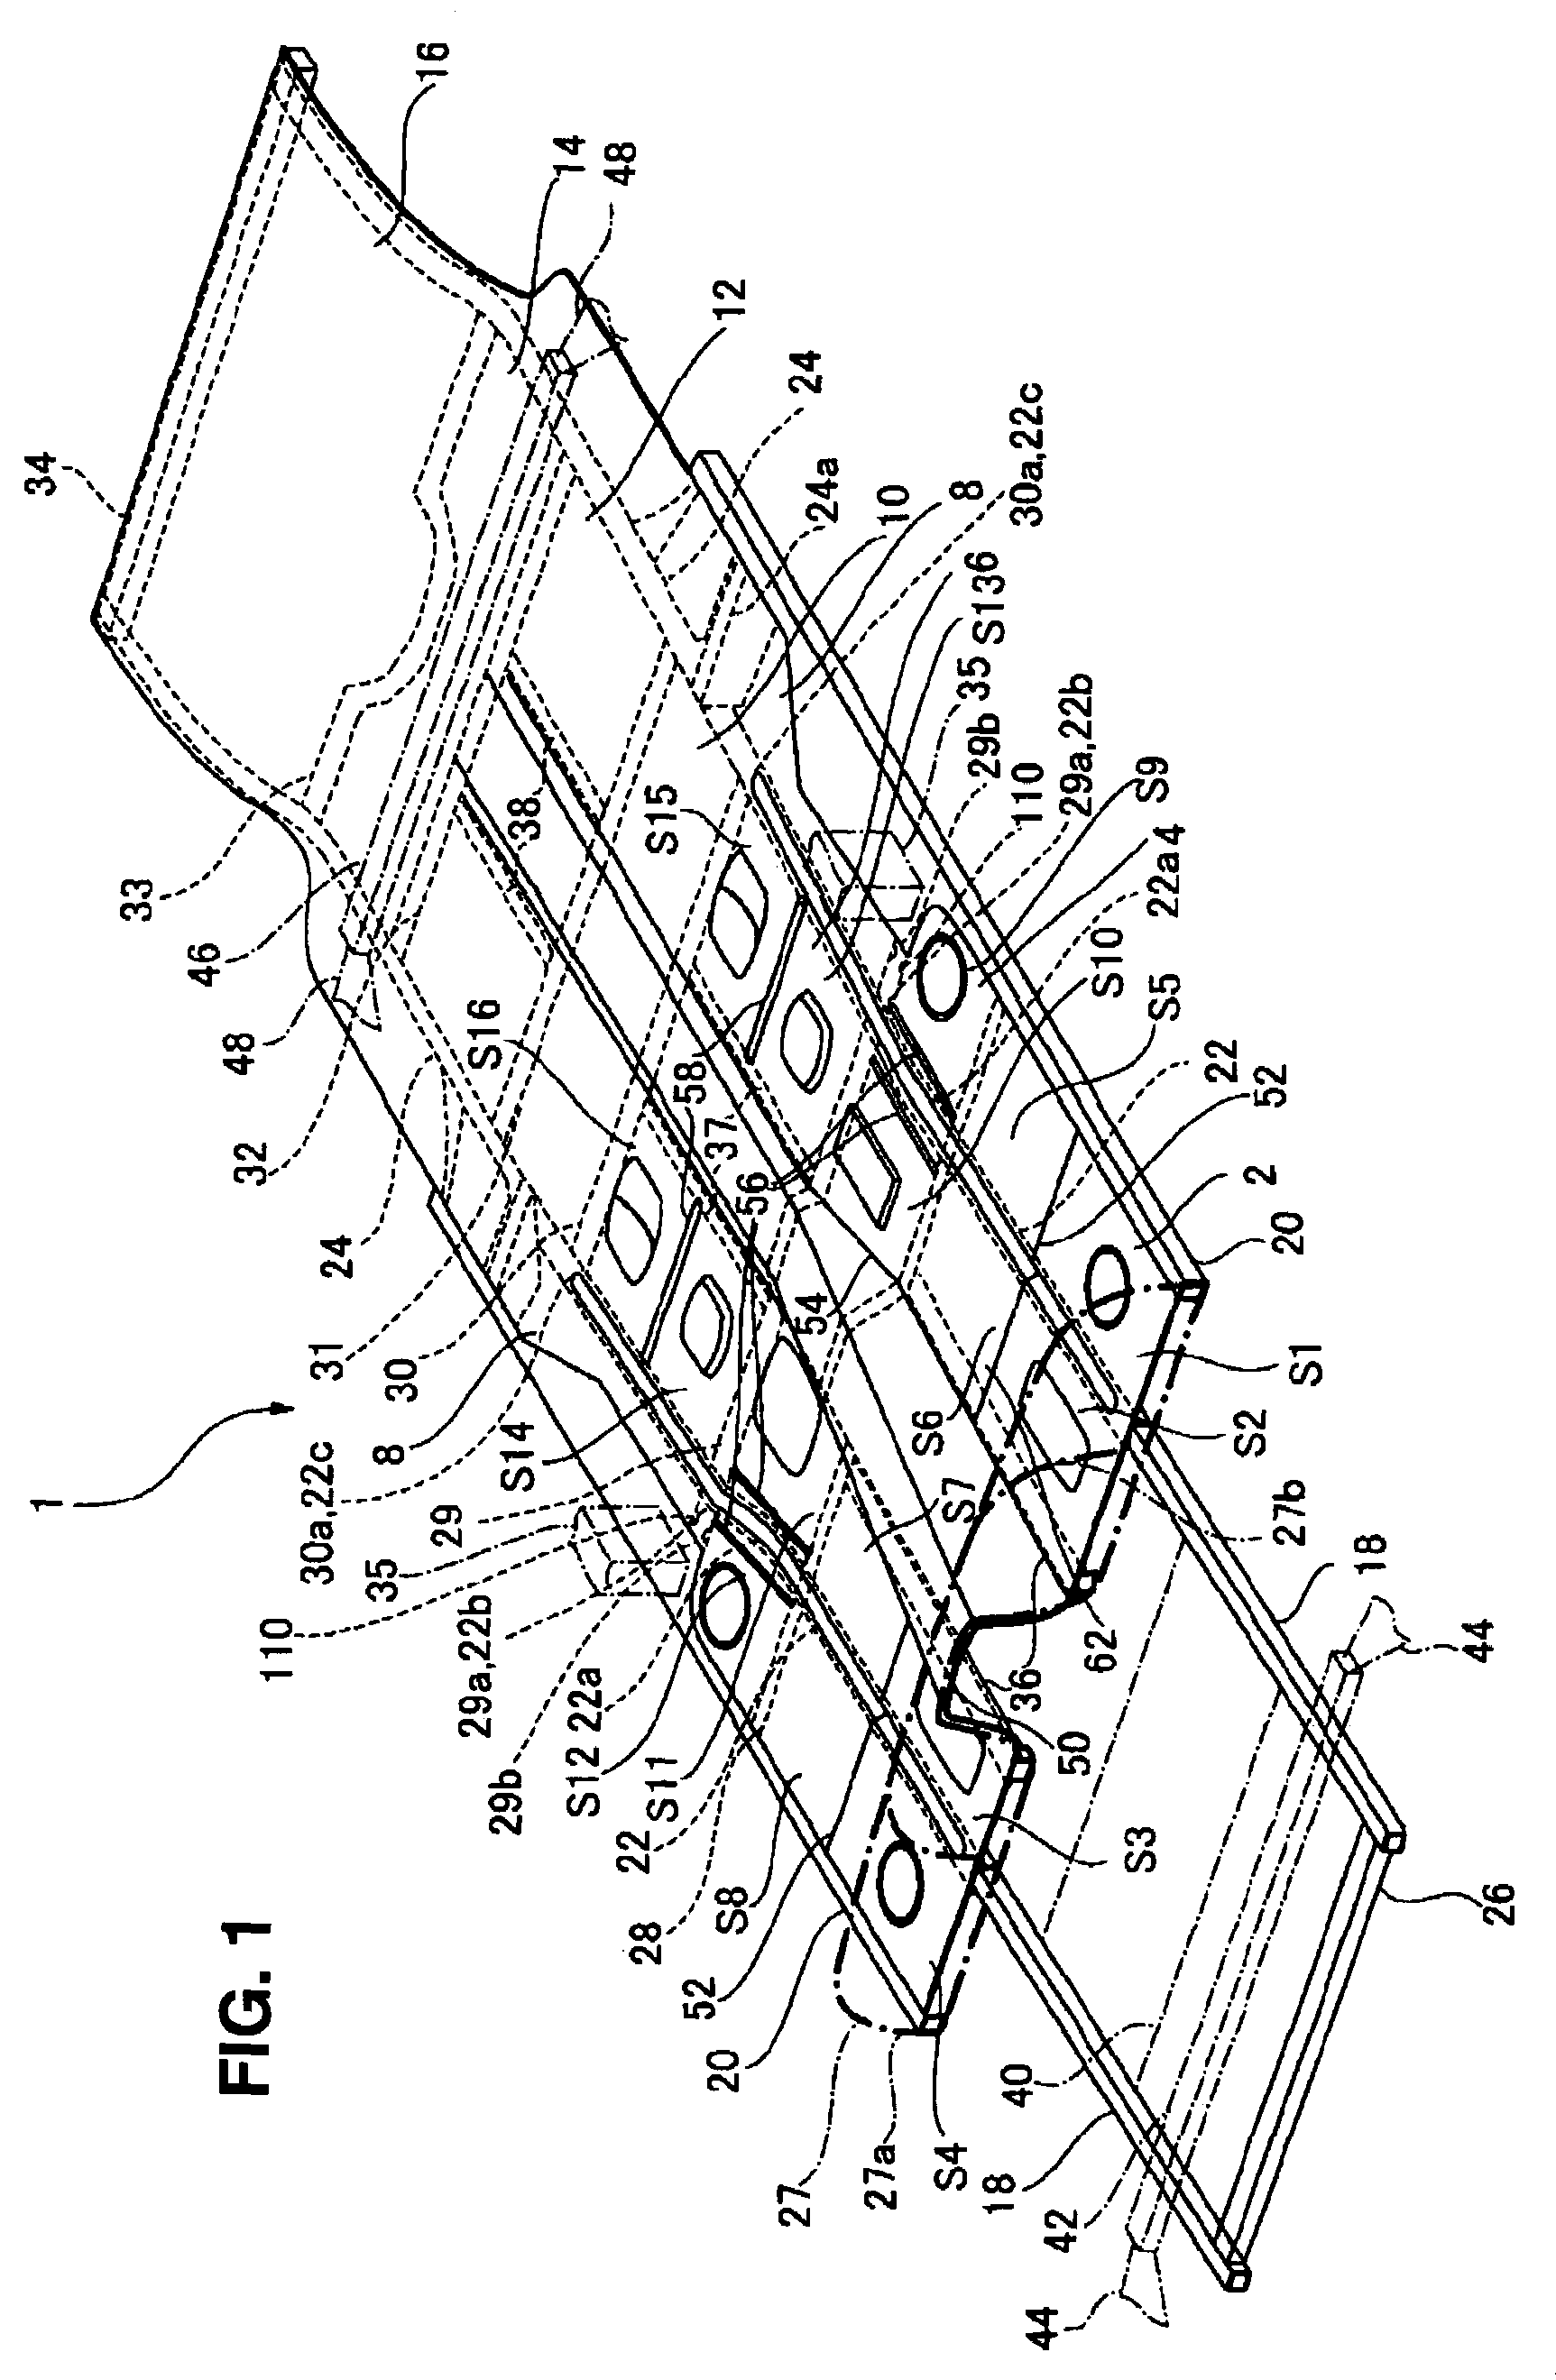 Floor panel structure of vehicle body